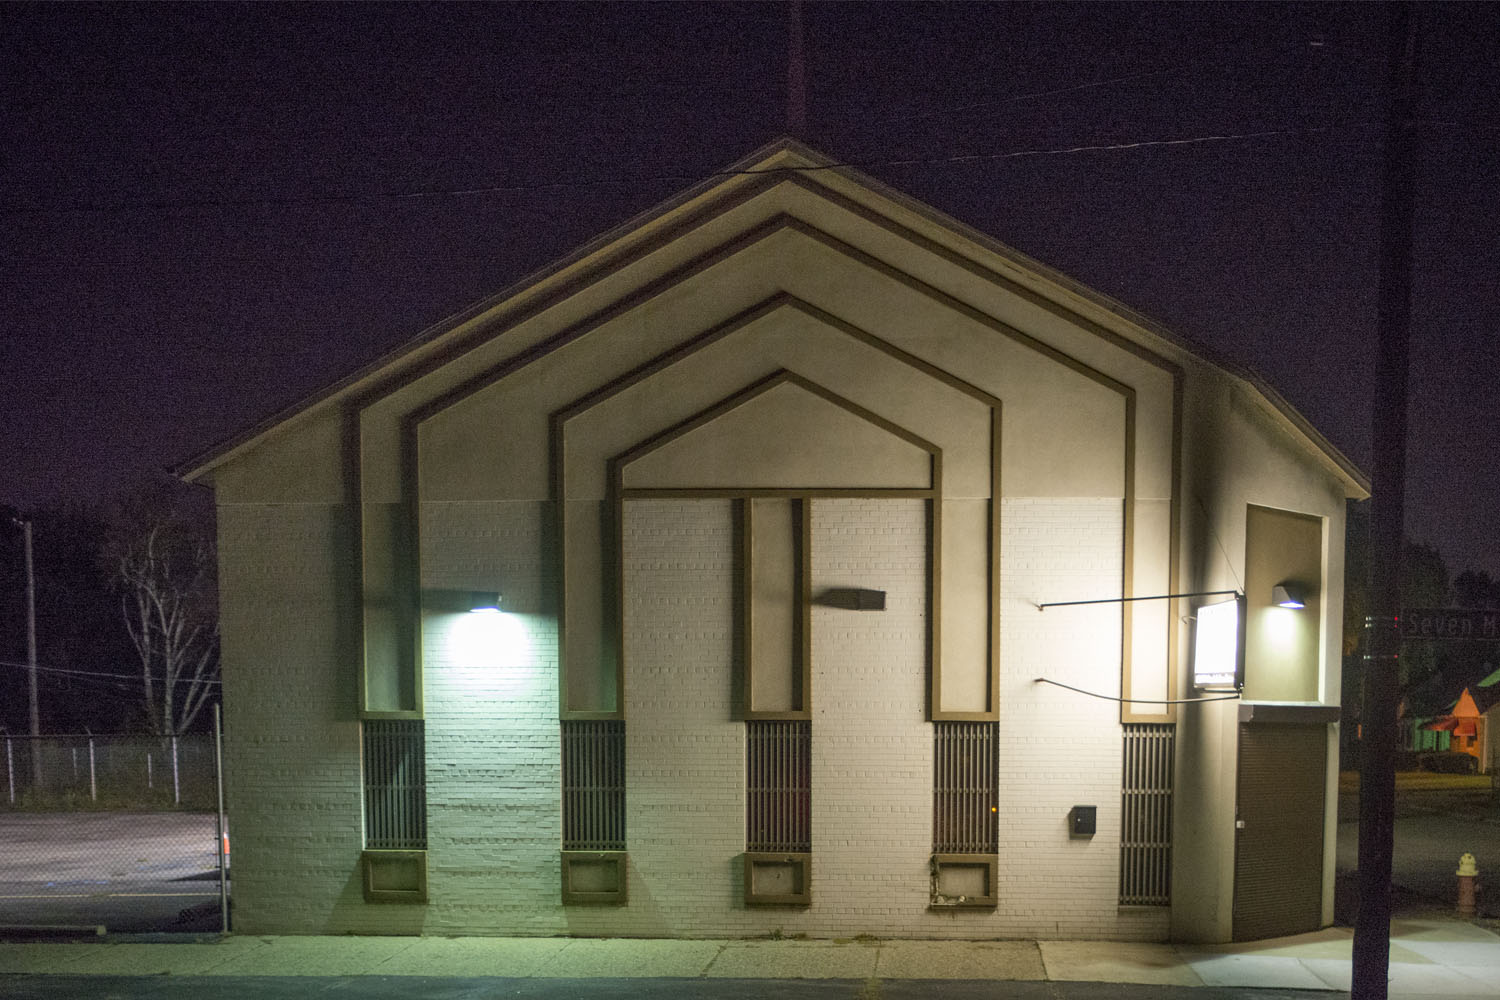 Good Hope Missionary Baptist Church of Detroit, 12051 East Seven Mile Rd. Detroit, Jimmie Jackson Pastor, 2013